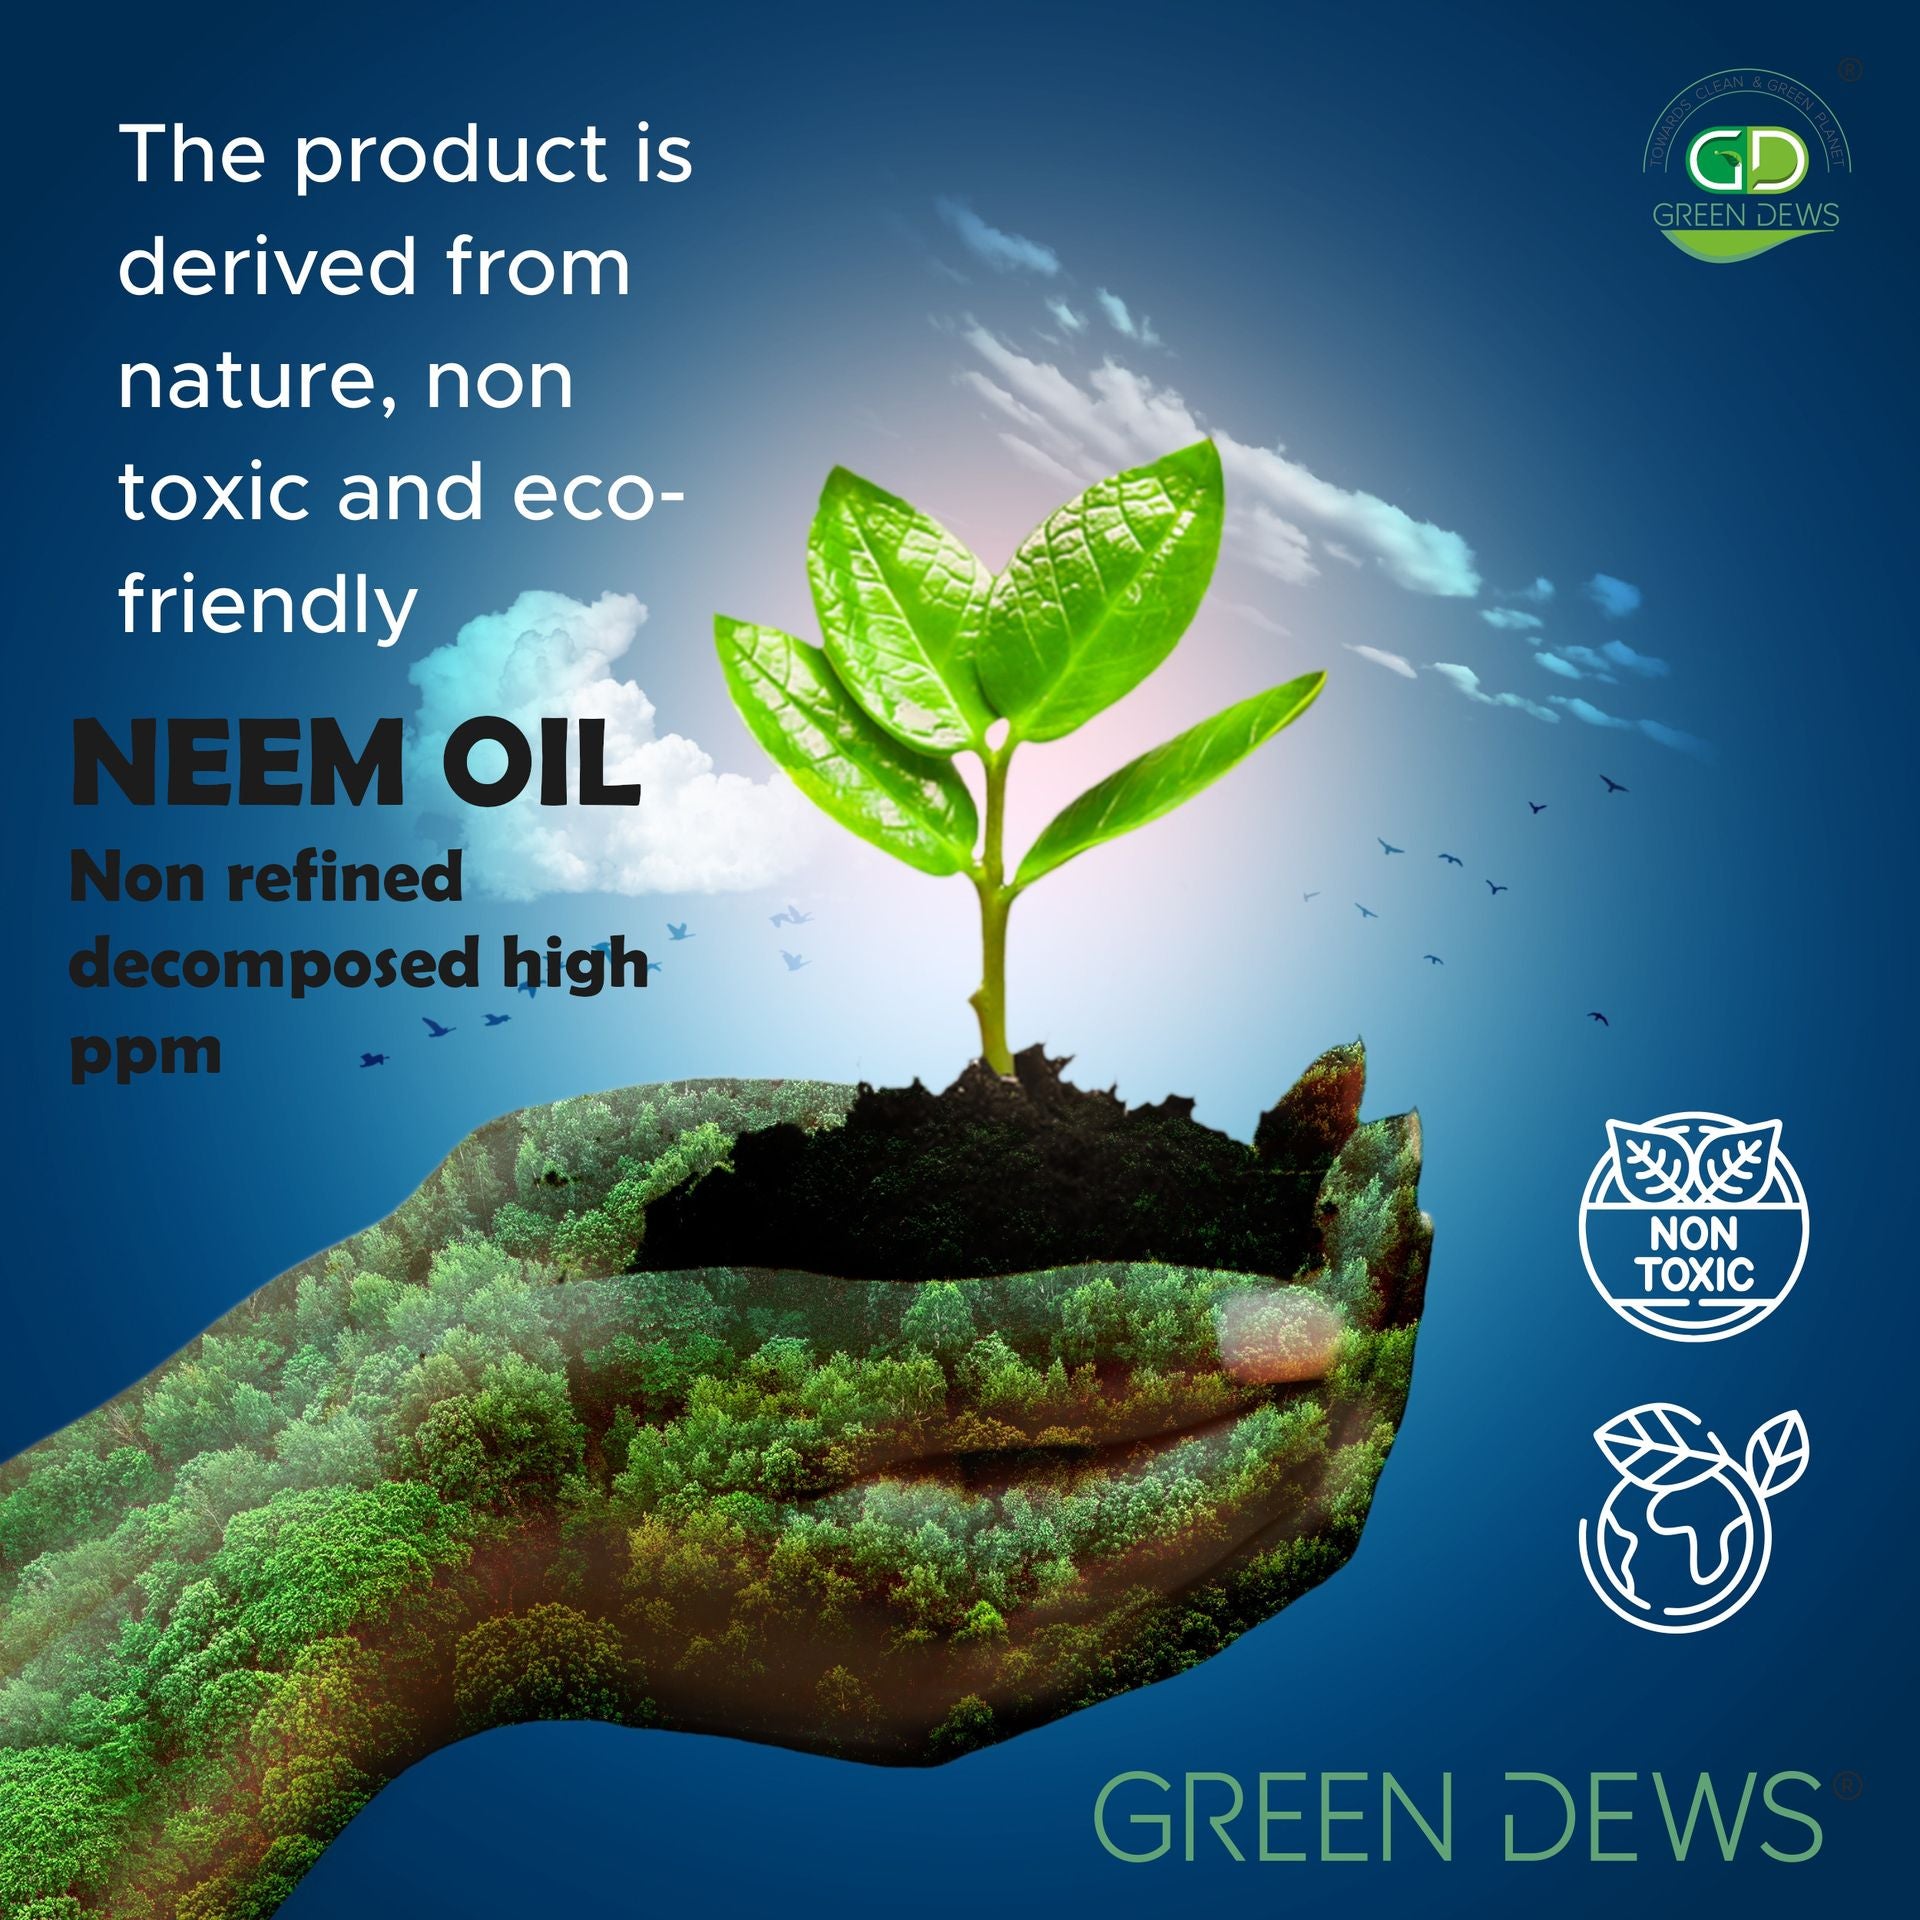 GreenDews Neem Oil - hfnl!fe